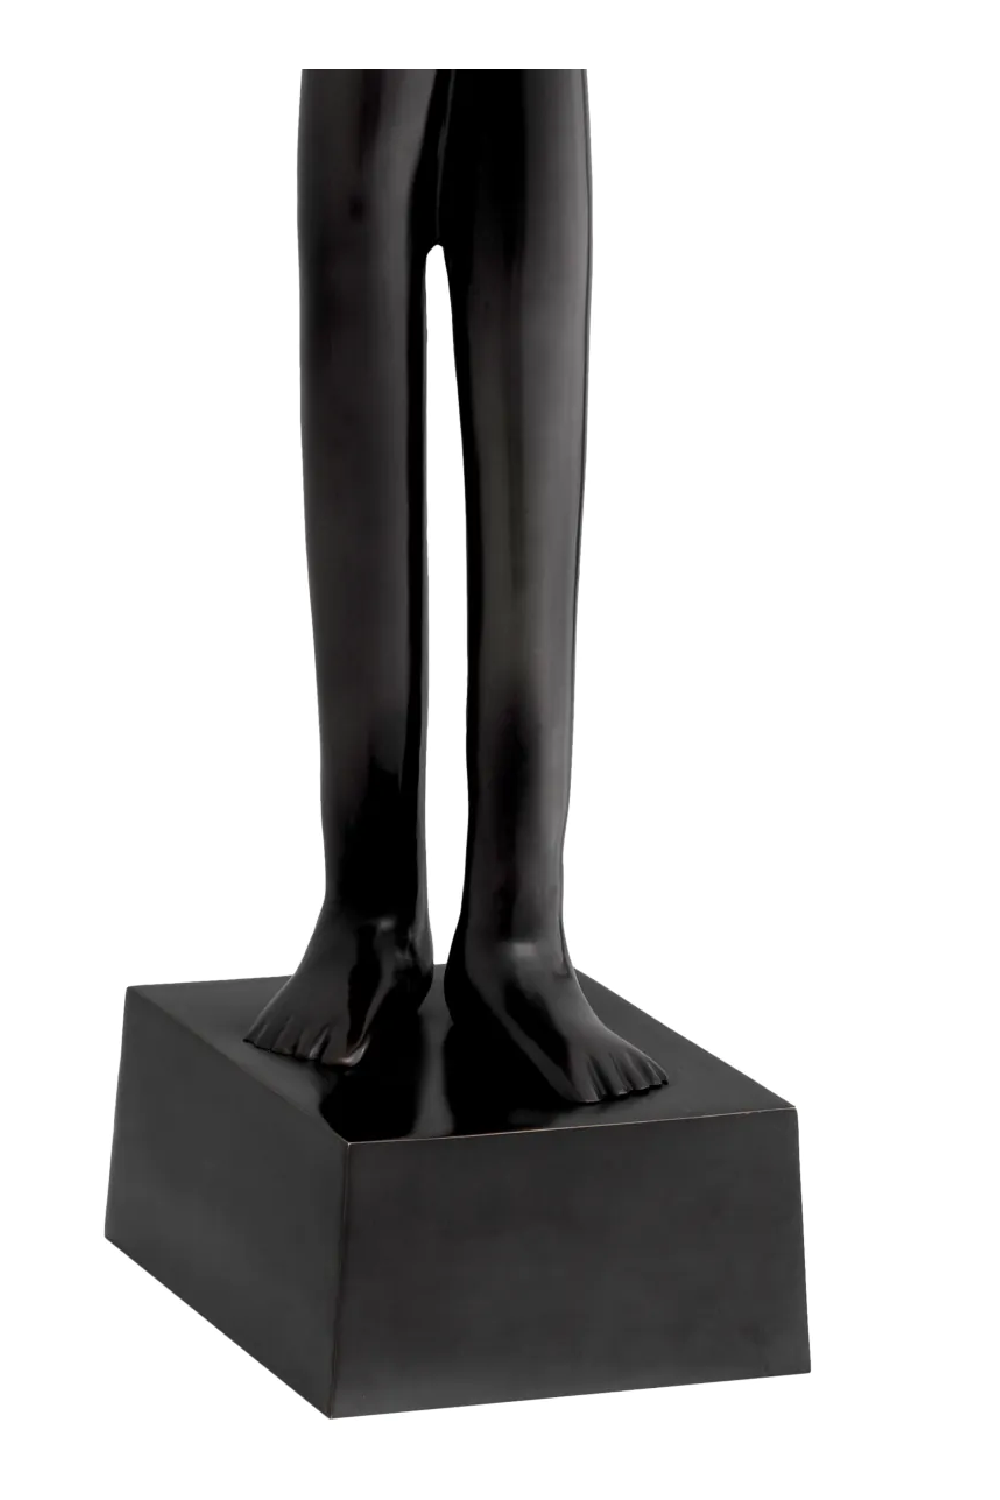 Bronze Body Sculpture | Eichholtz Olina | Oroa.com